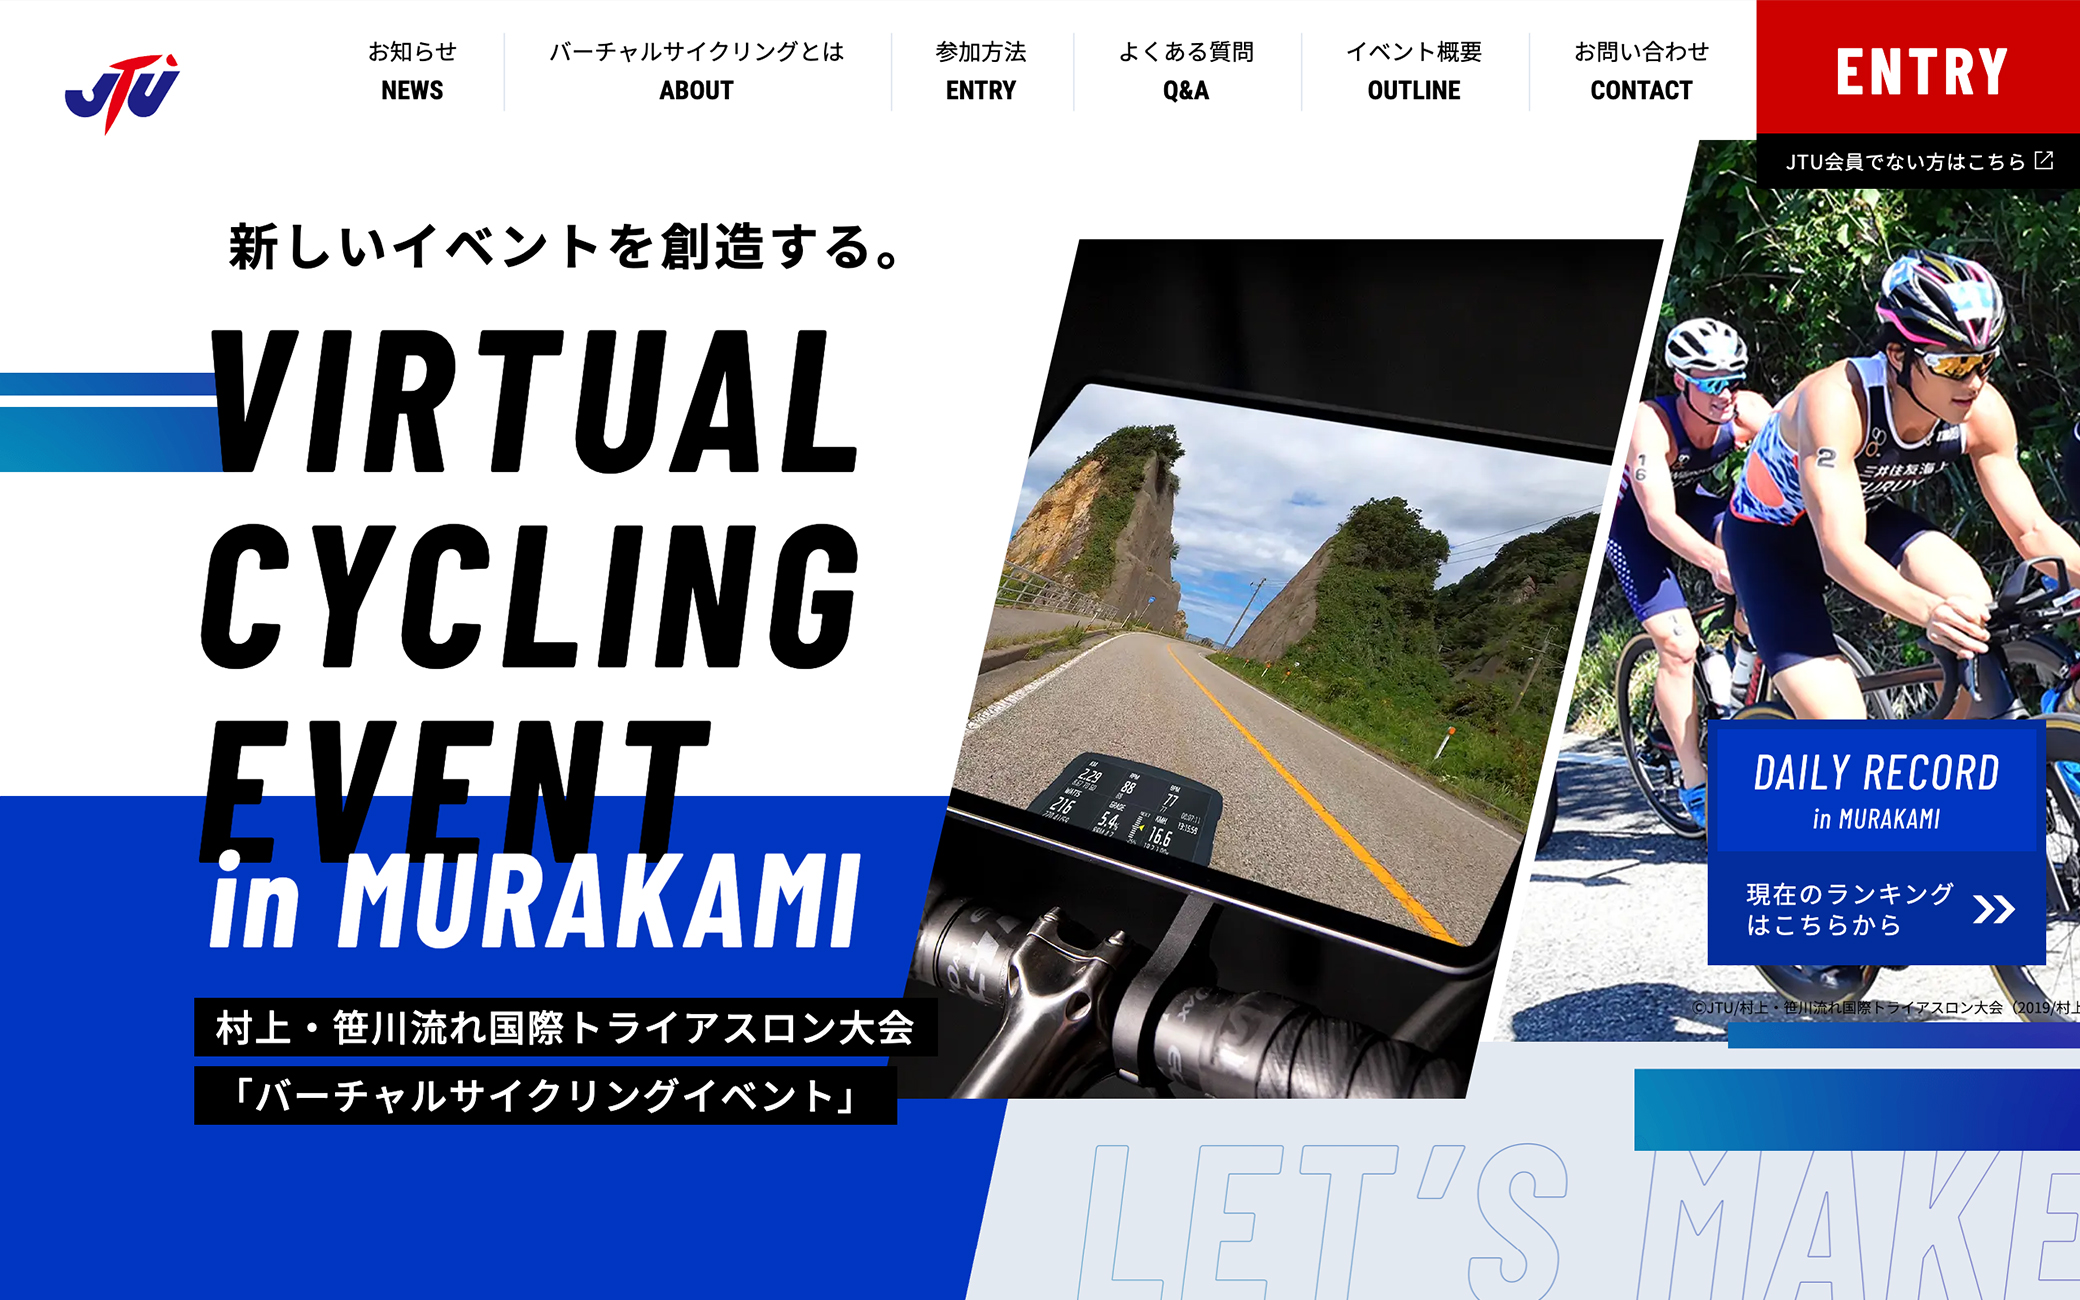 VIRTUAL CYCLING EVENT in MURAKAMI